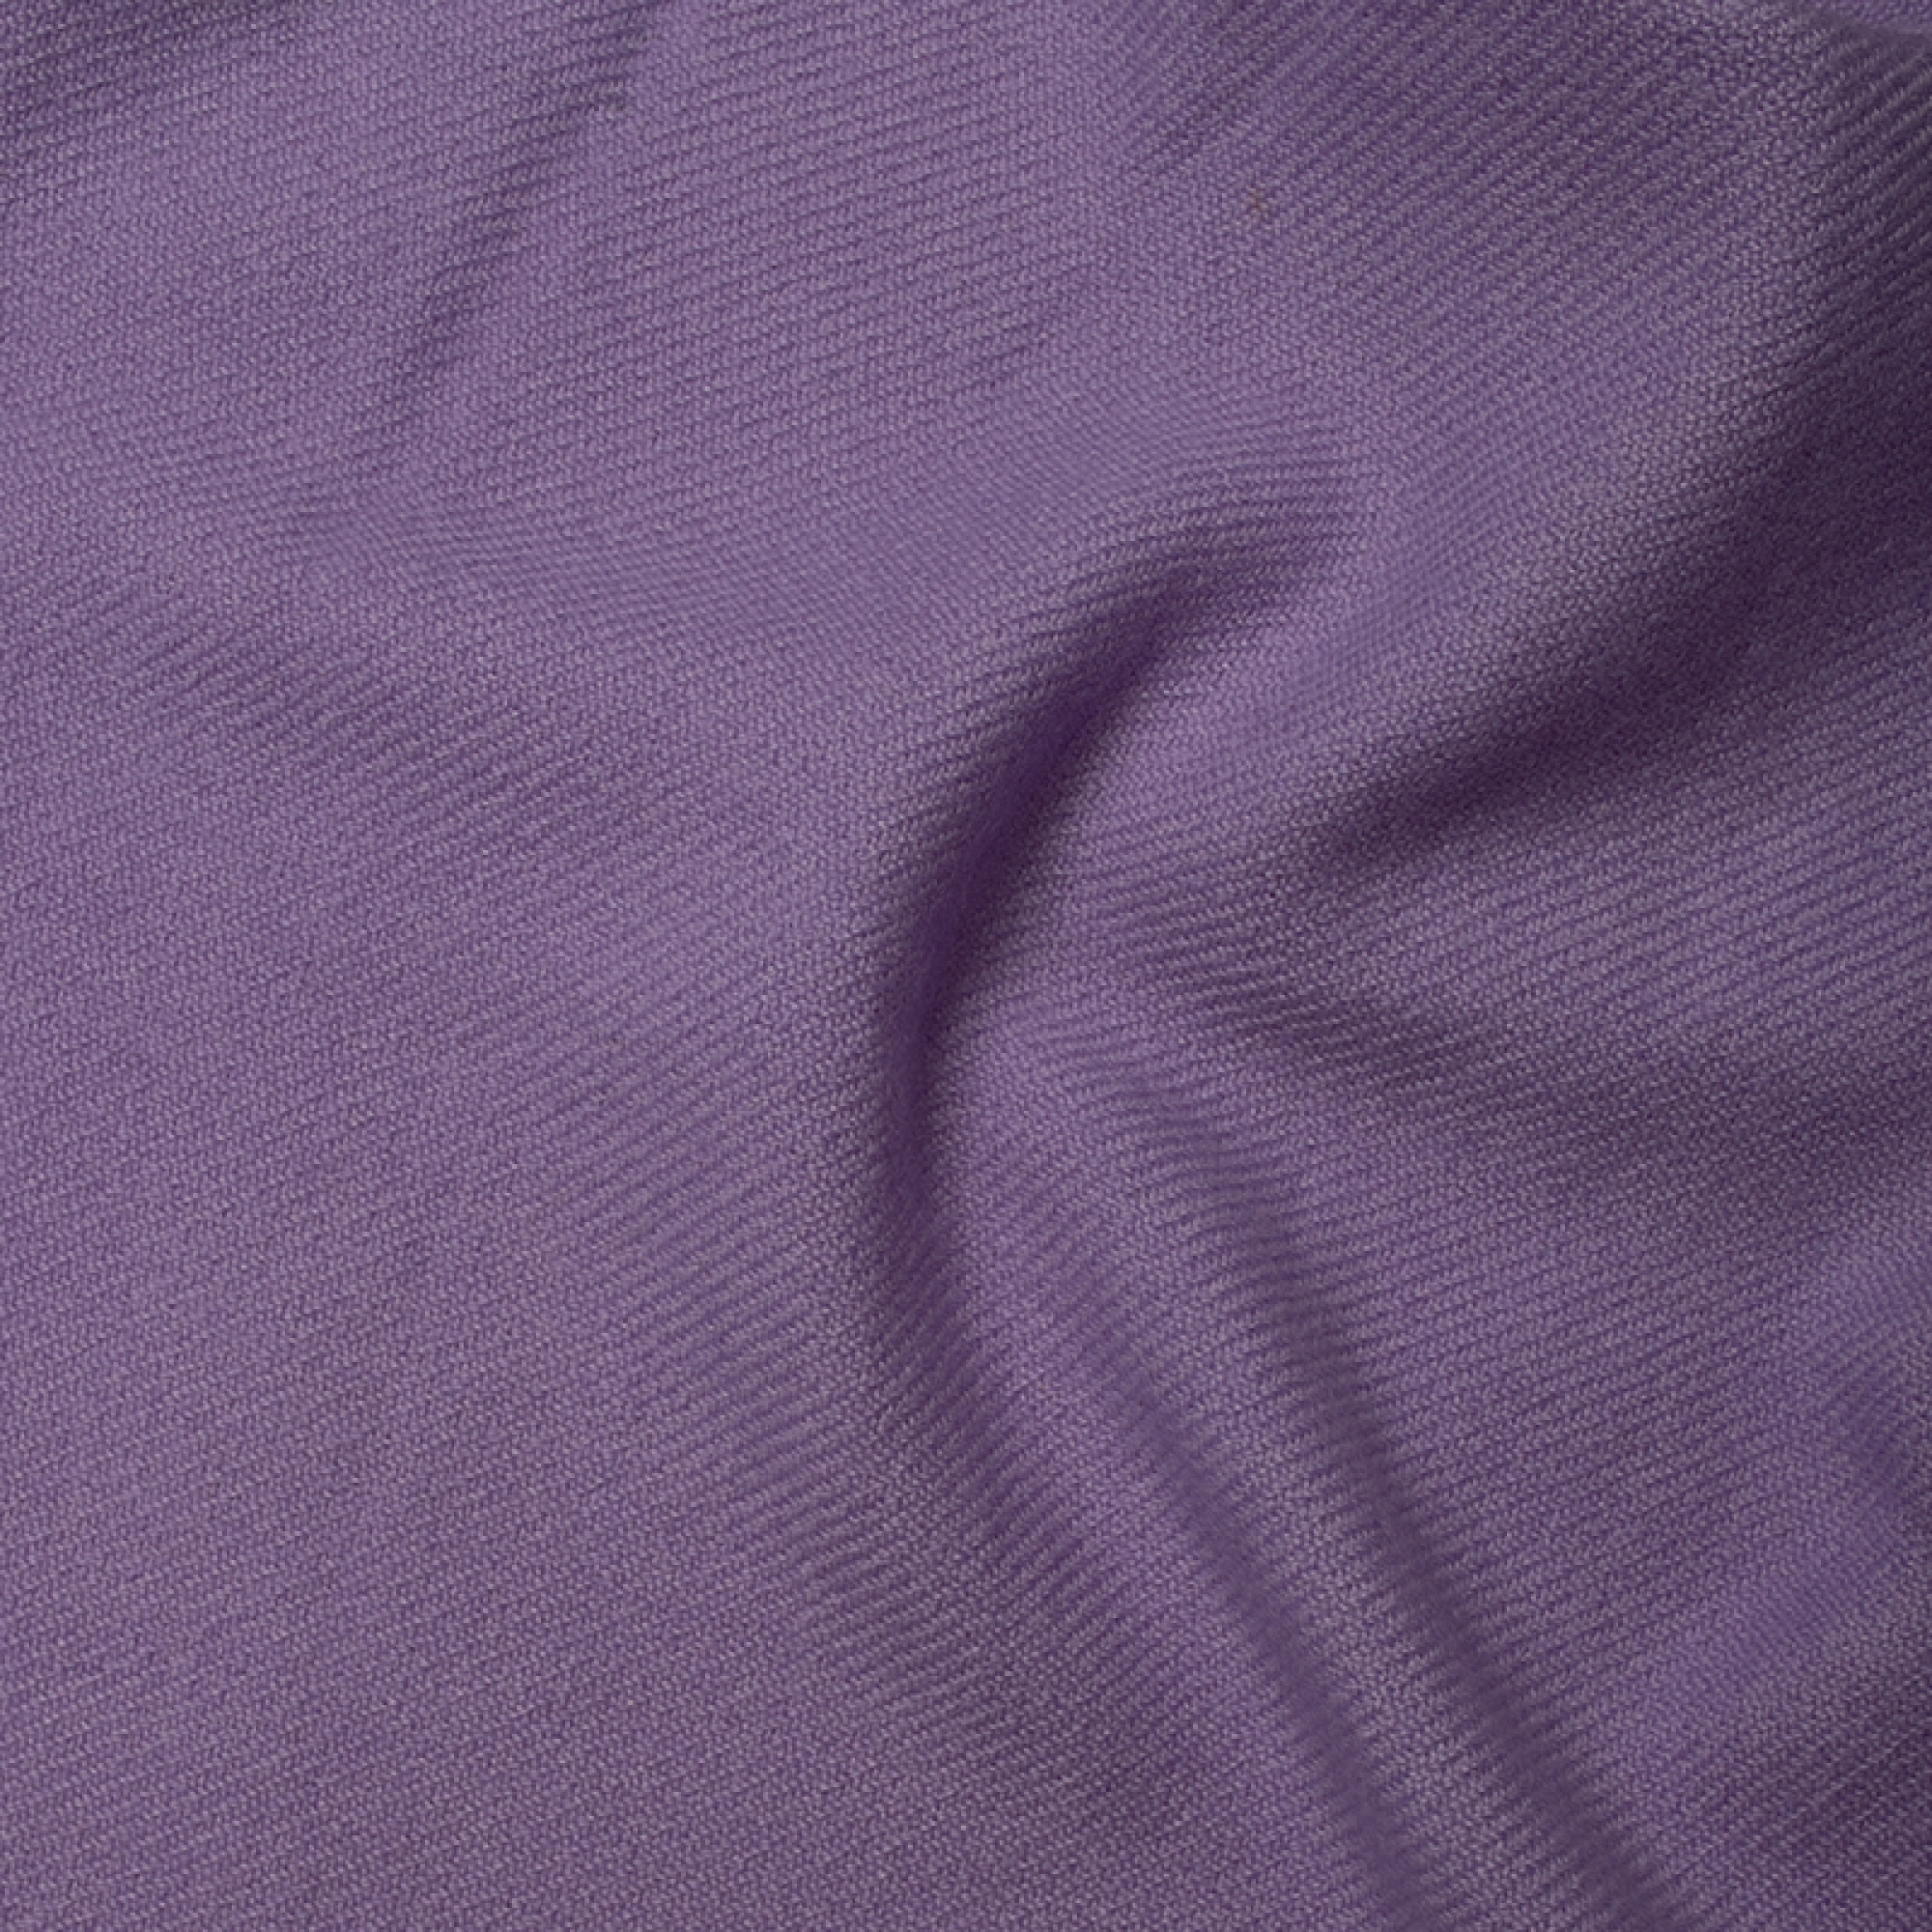 Cashmere accessories blanket toodoo plain s 140 x 200 violet tulip 140 x 200 cm